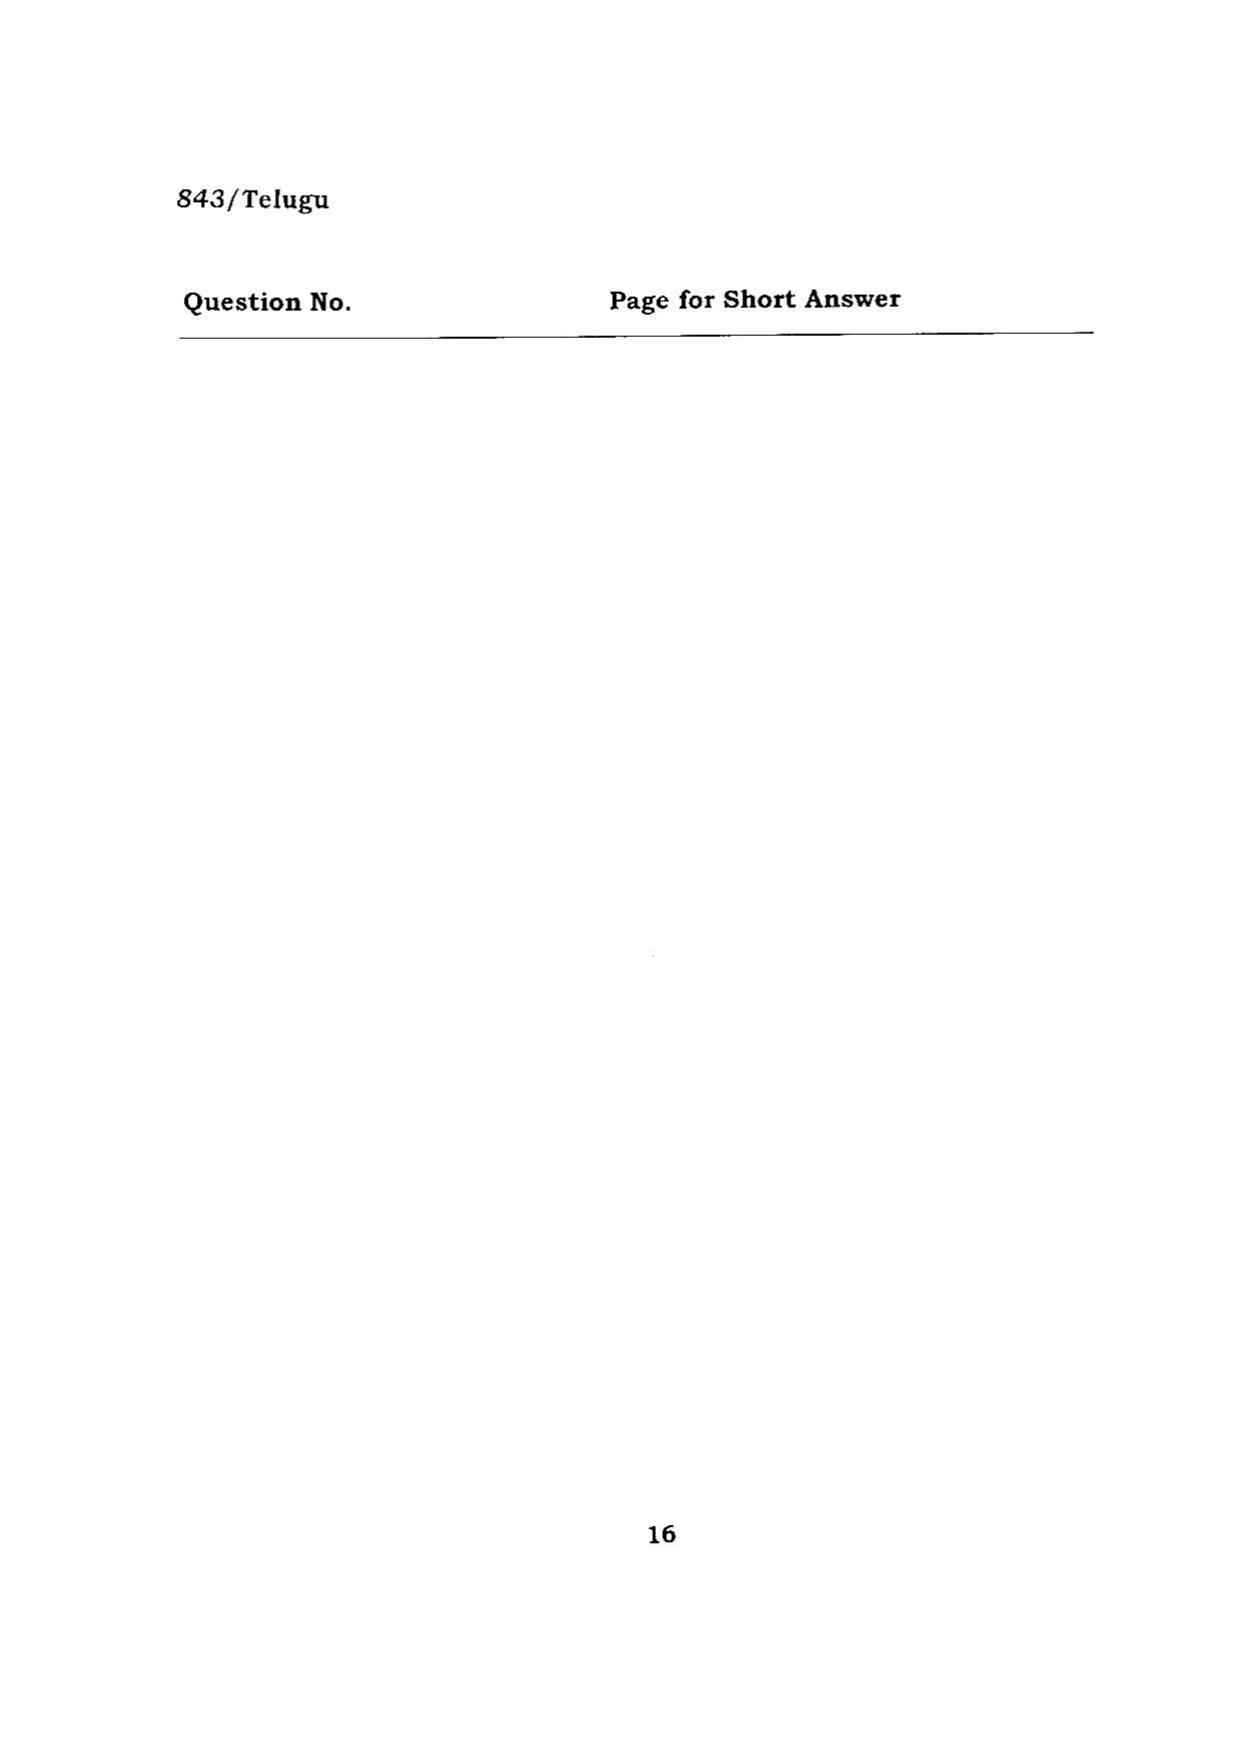 BHU RET TELUGU 2015 Question Paper - Page 16